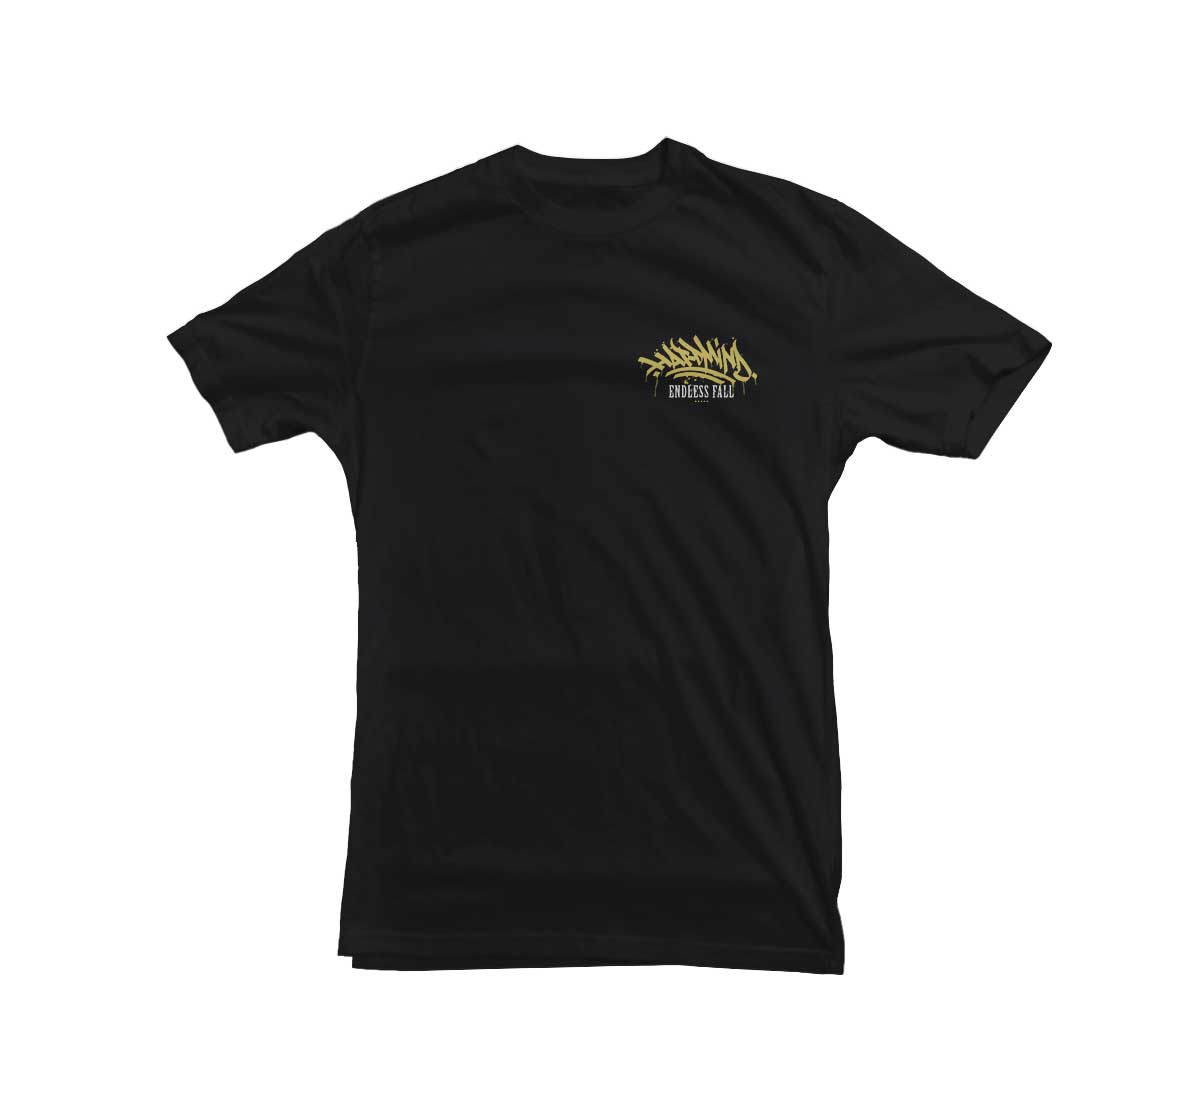 HARDMIND "Endless Fall" Black T-Shirt